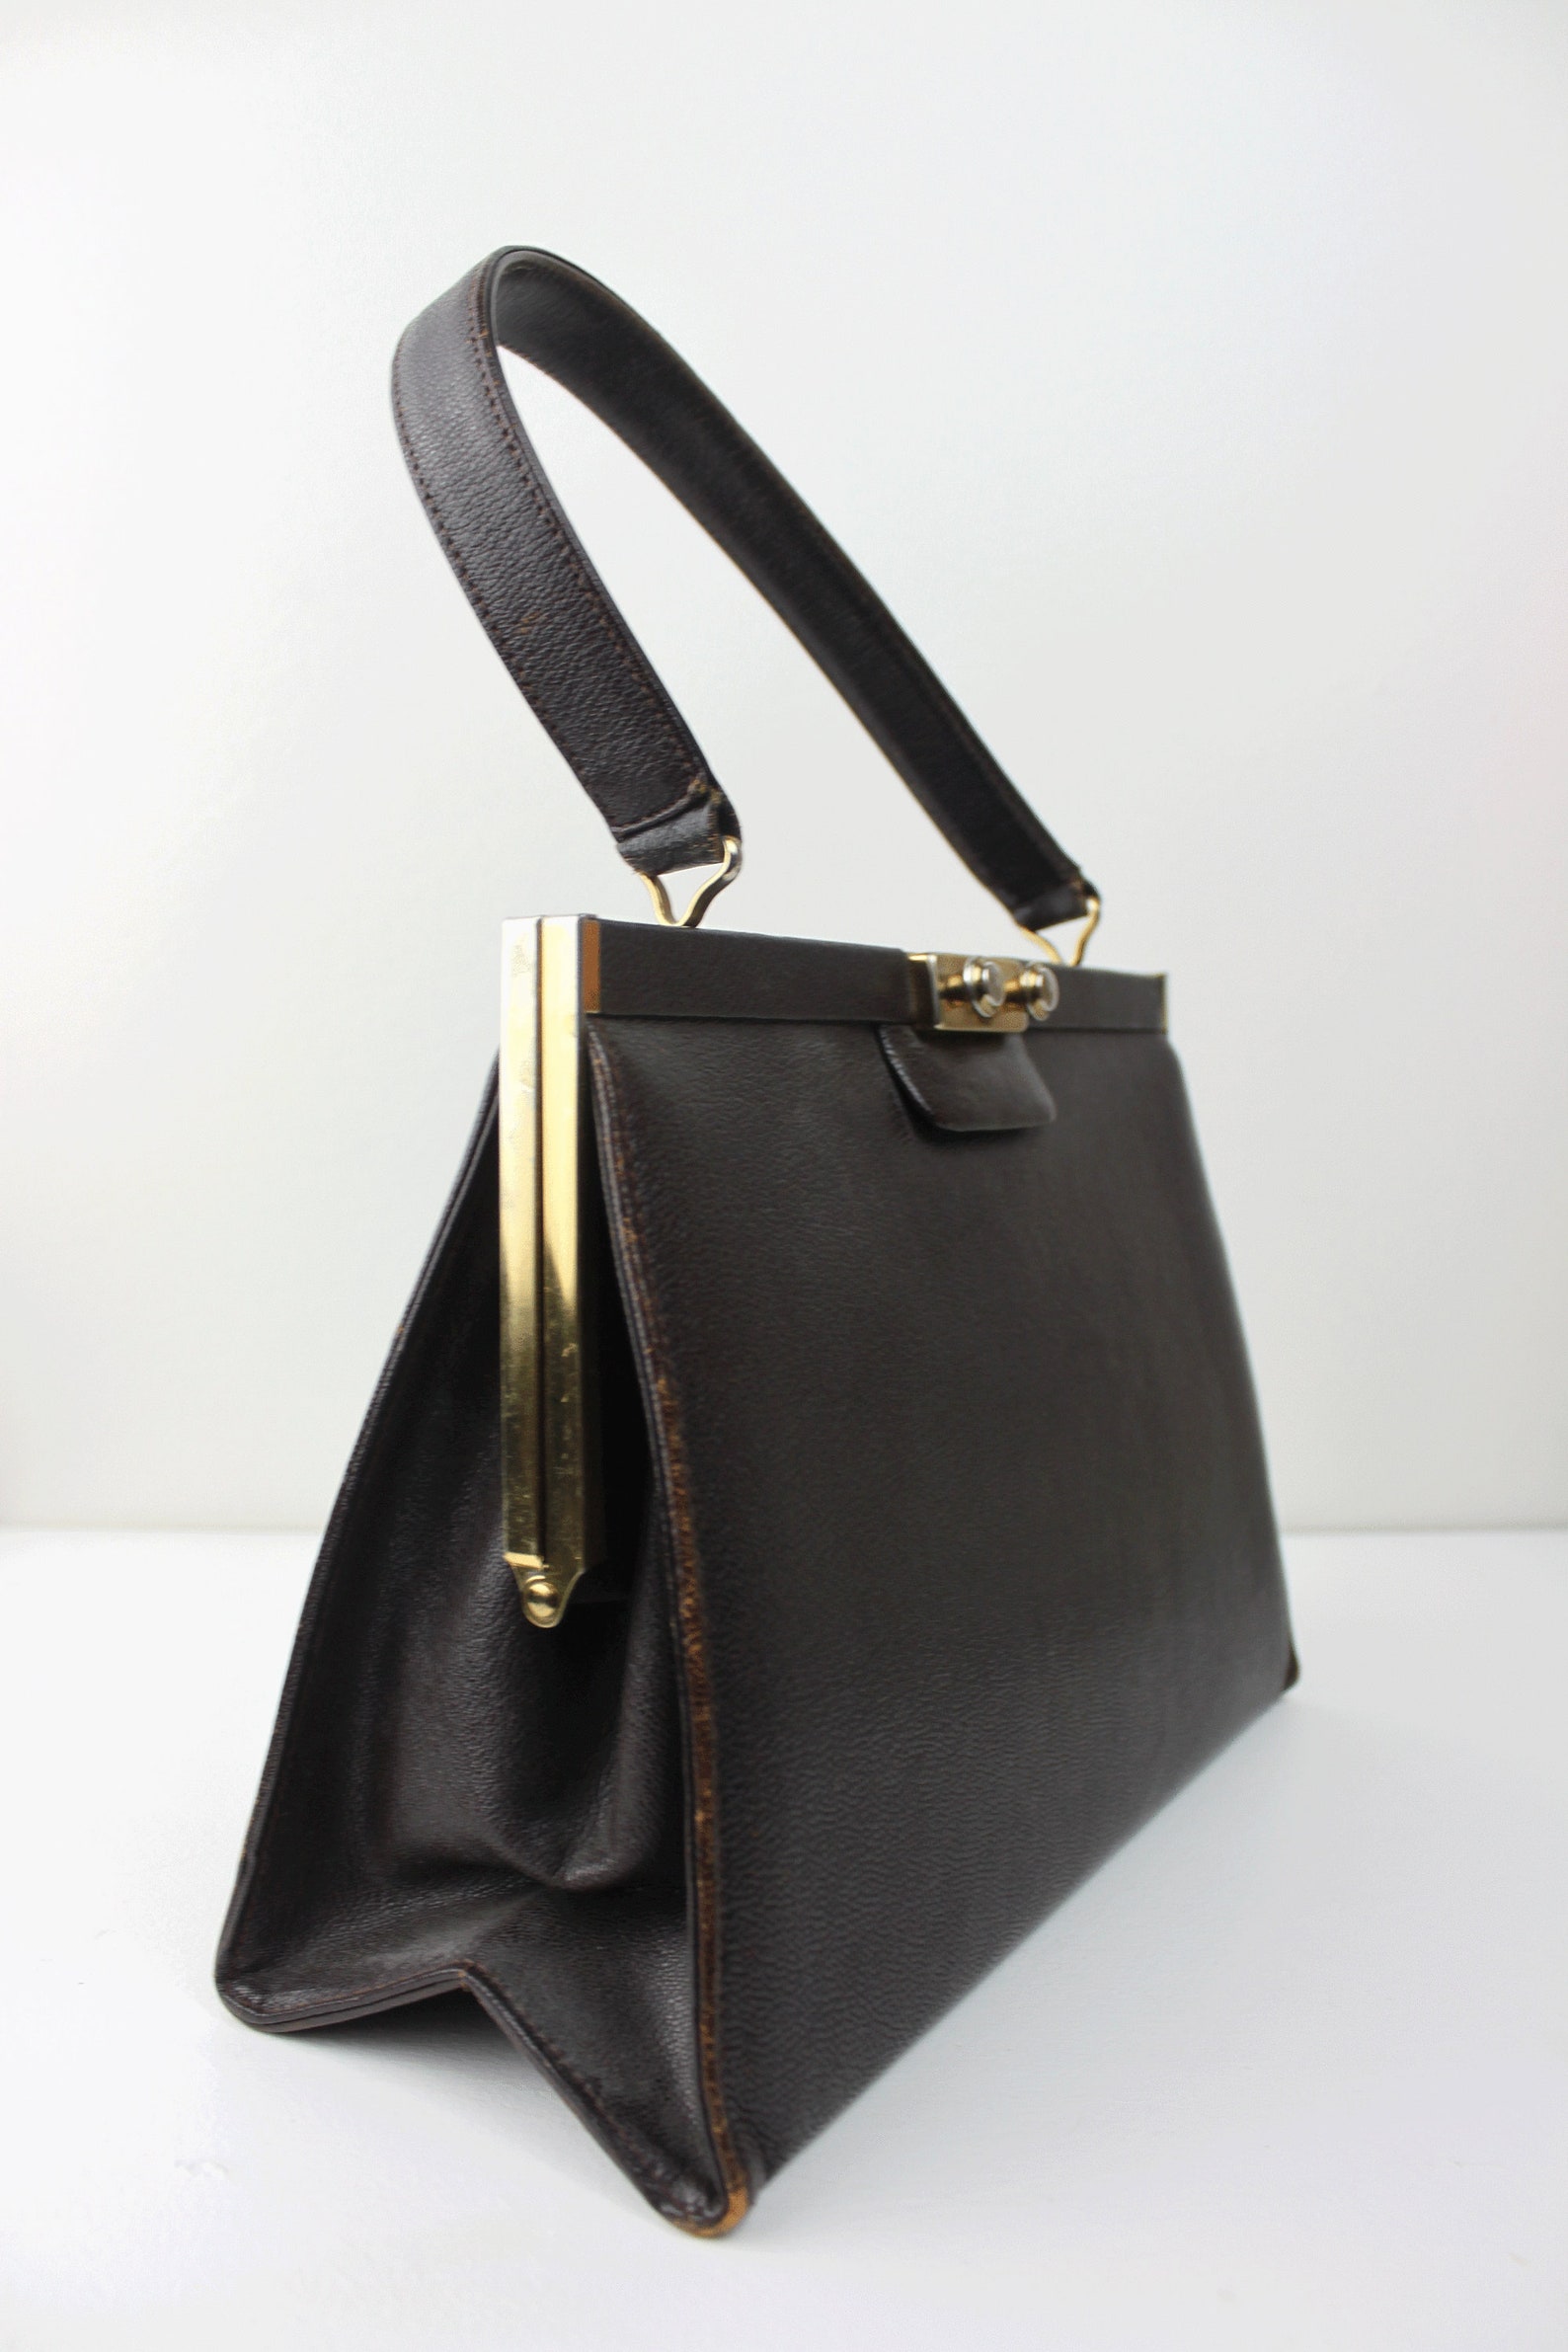 The Dorchester Birks 1950s/60s Brown Leather Handbag W/ Gold | Etsy